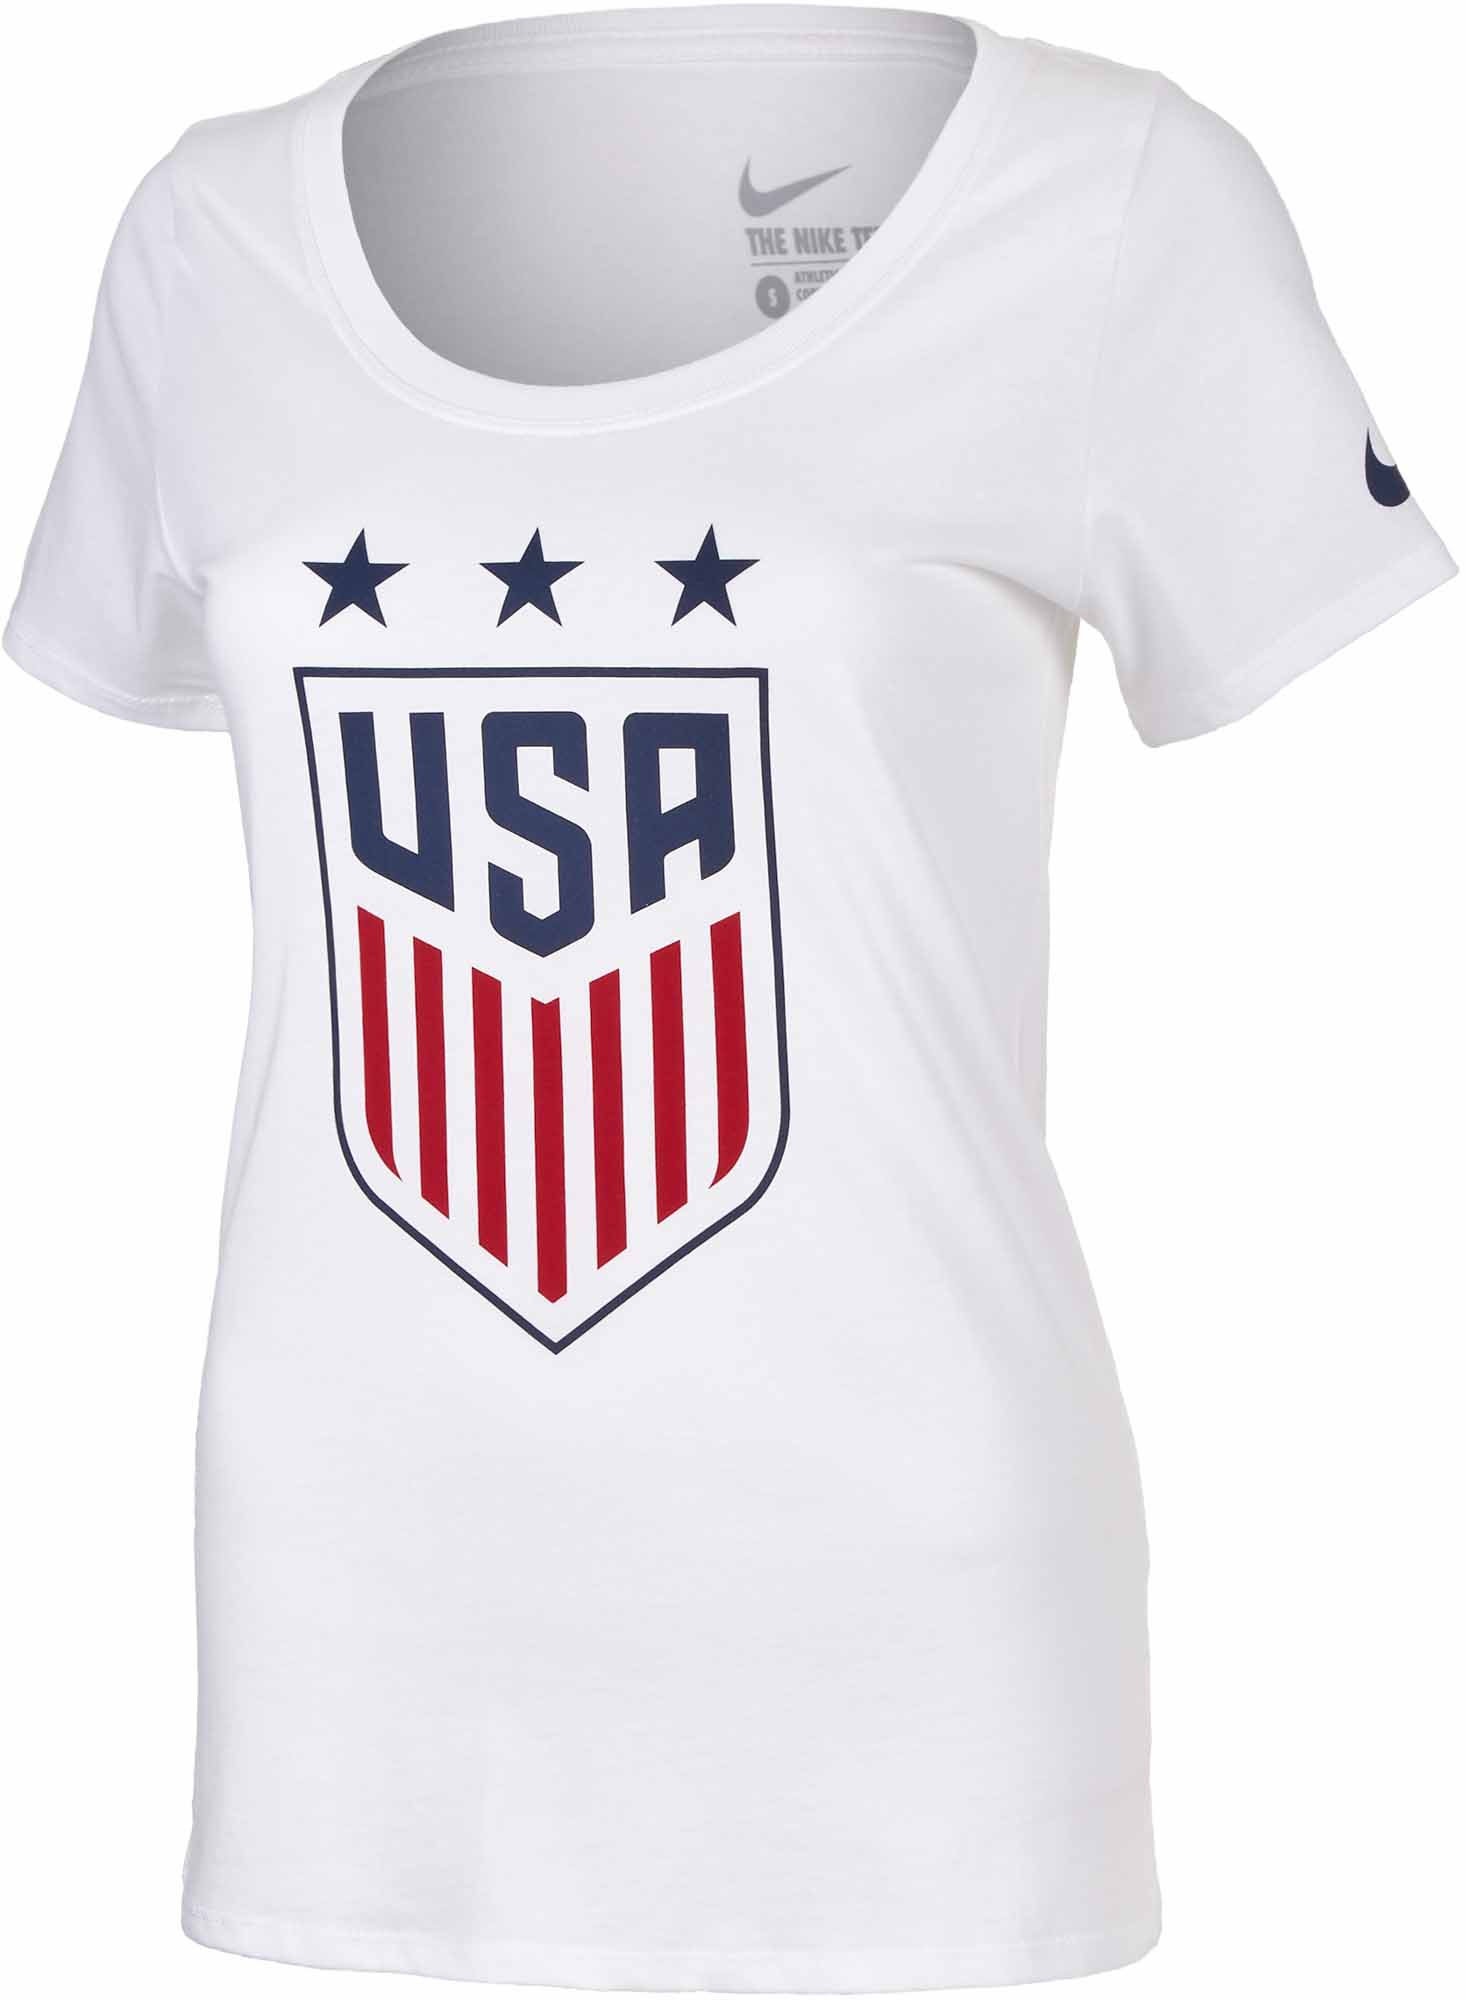 Nike Womens USA Evergreen Crest Tee - White